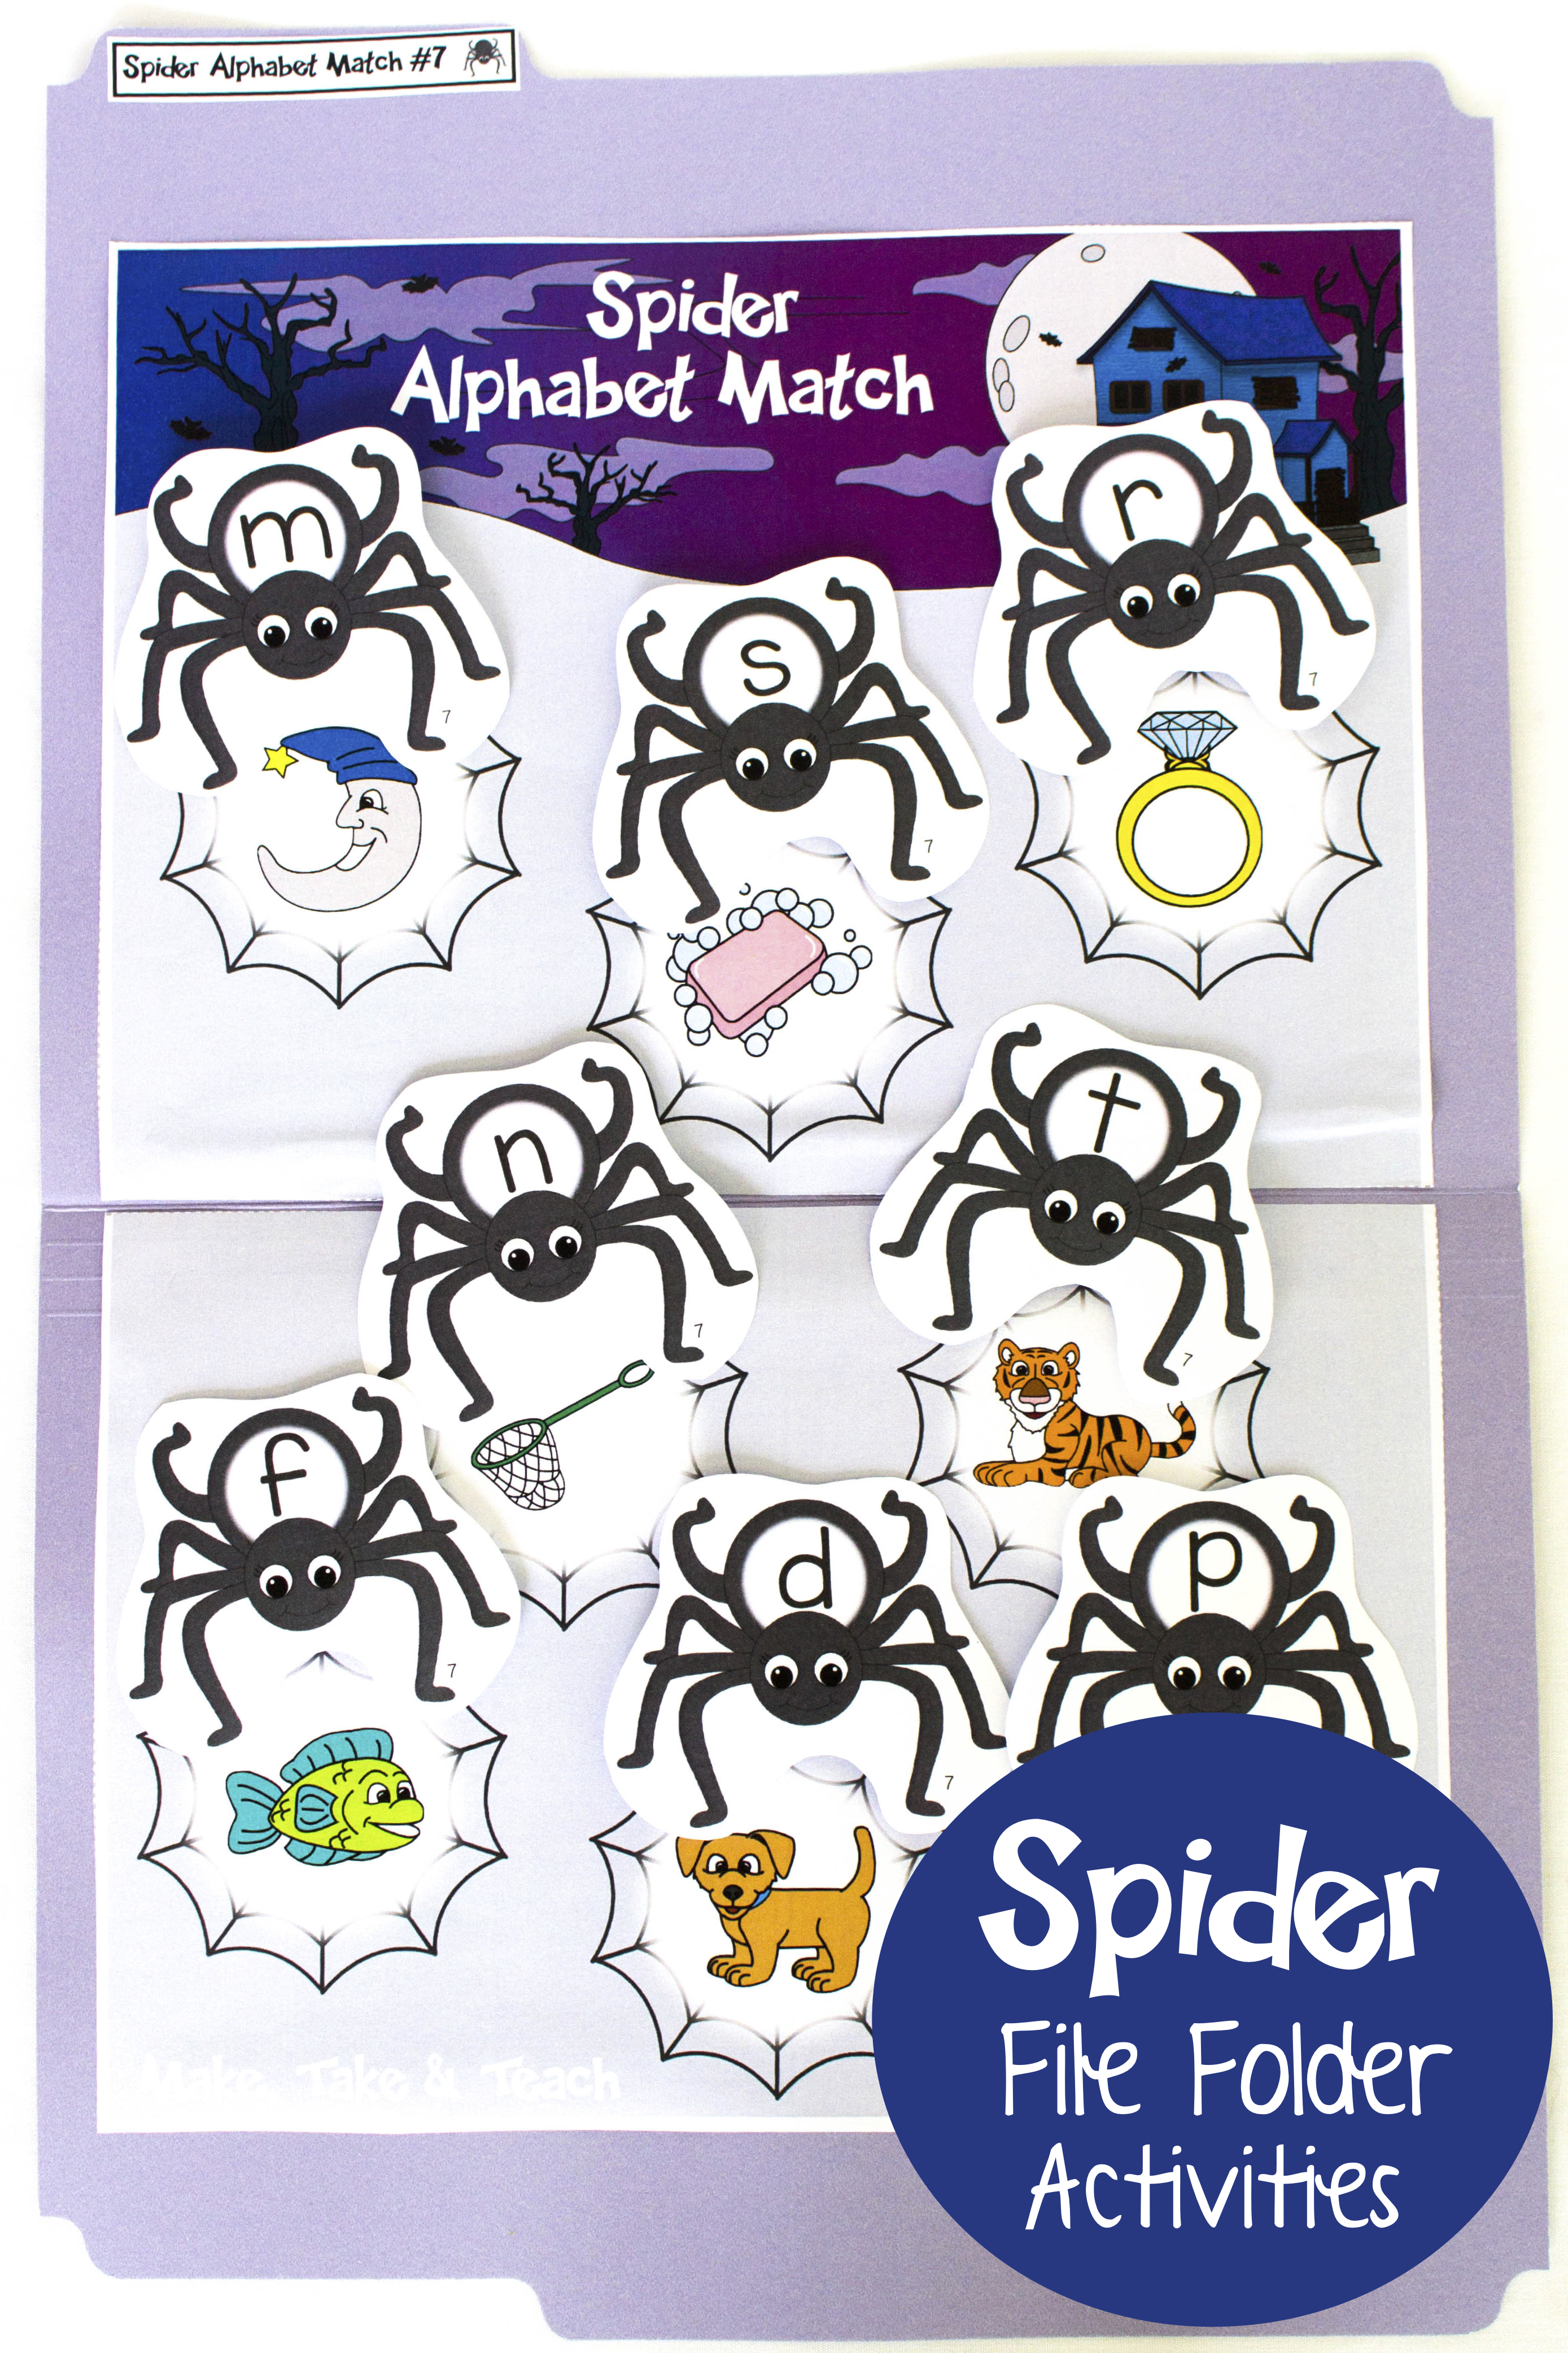 Spider File Folder Alphabet Match for Halloween